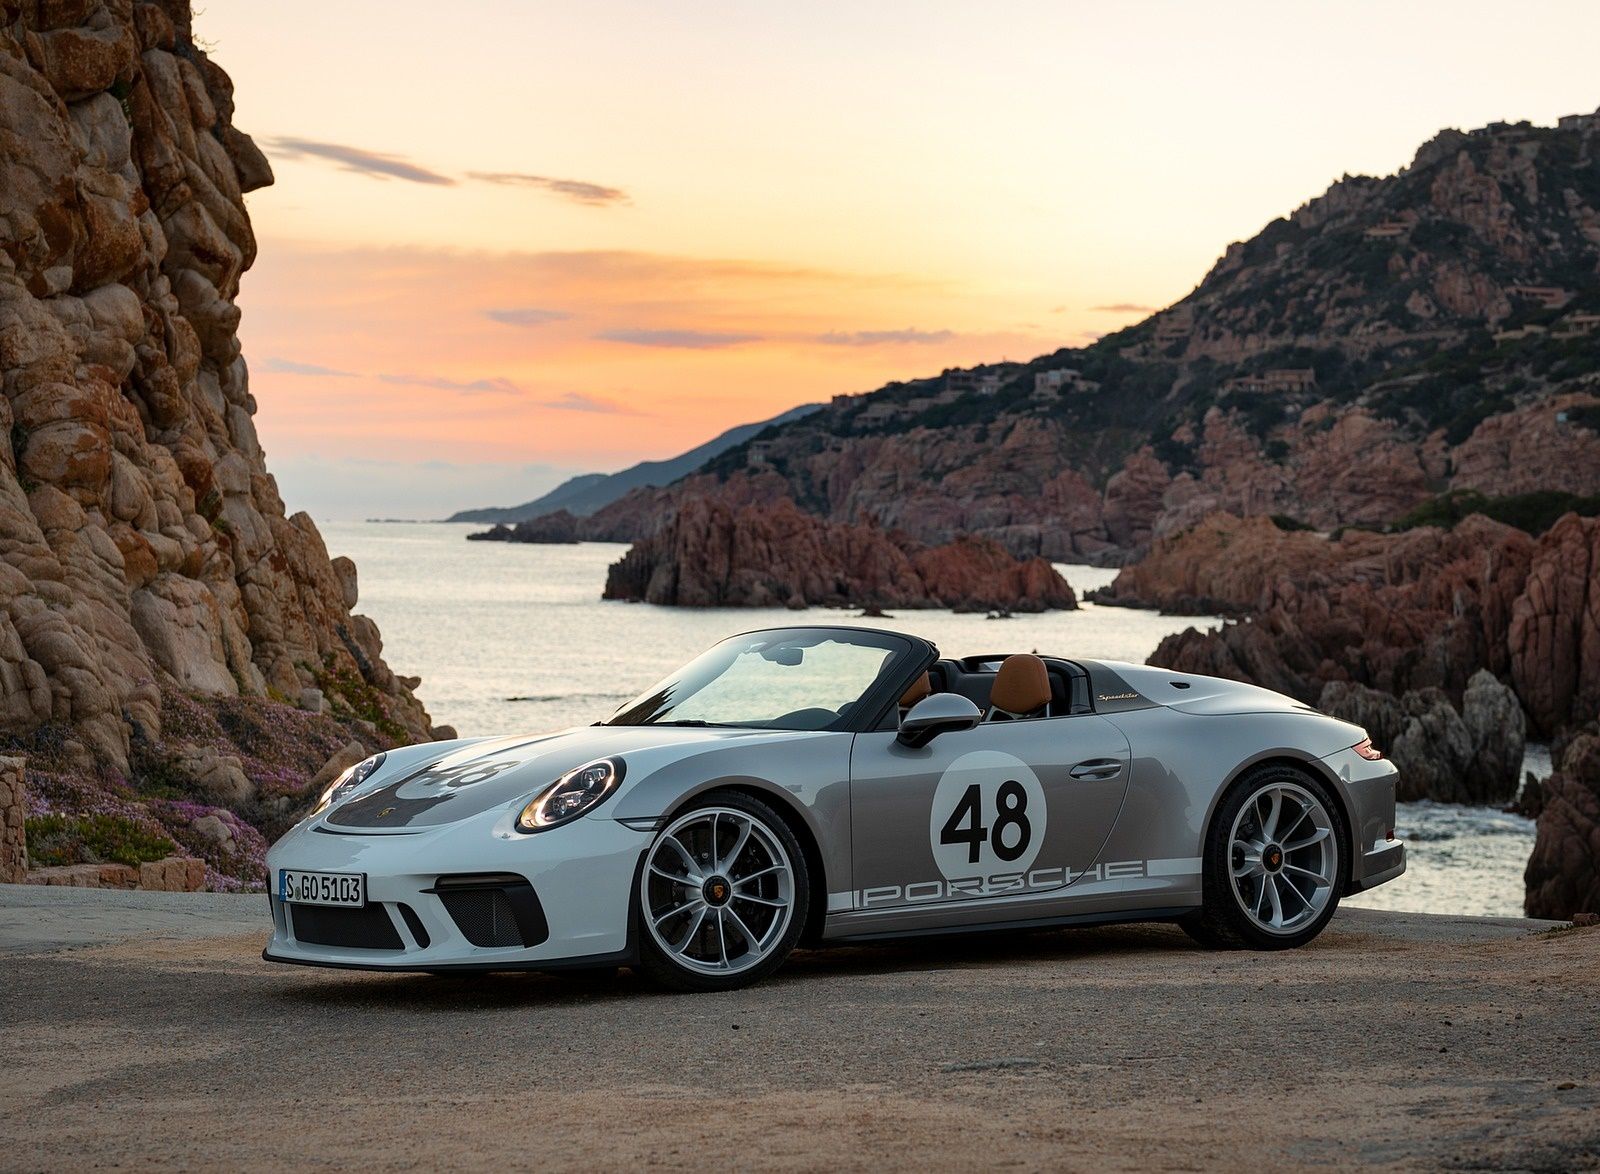 Porsche 911 Speedster Wallpapers